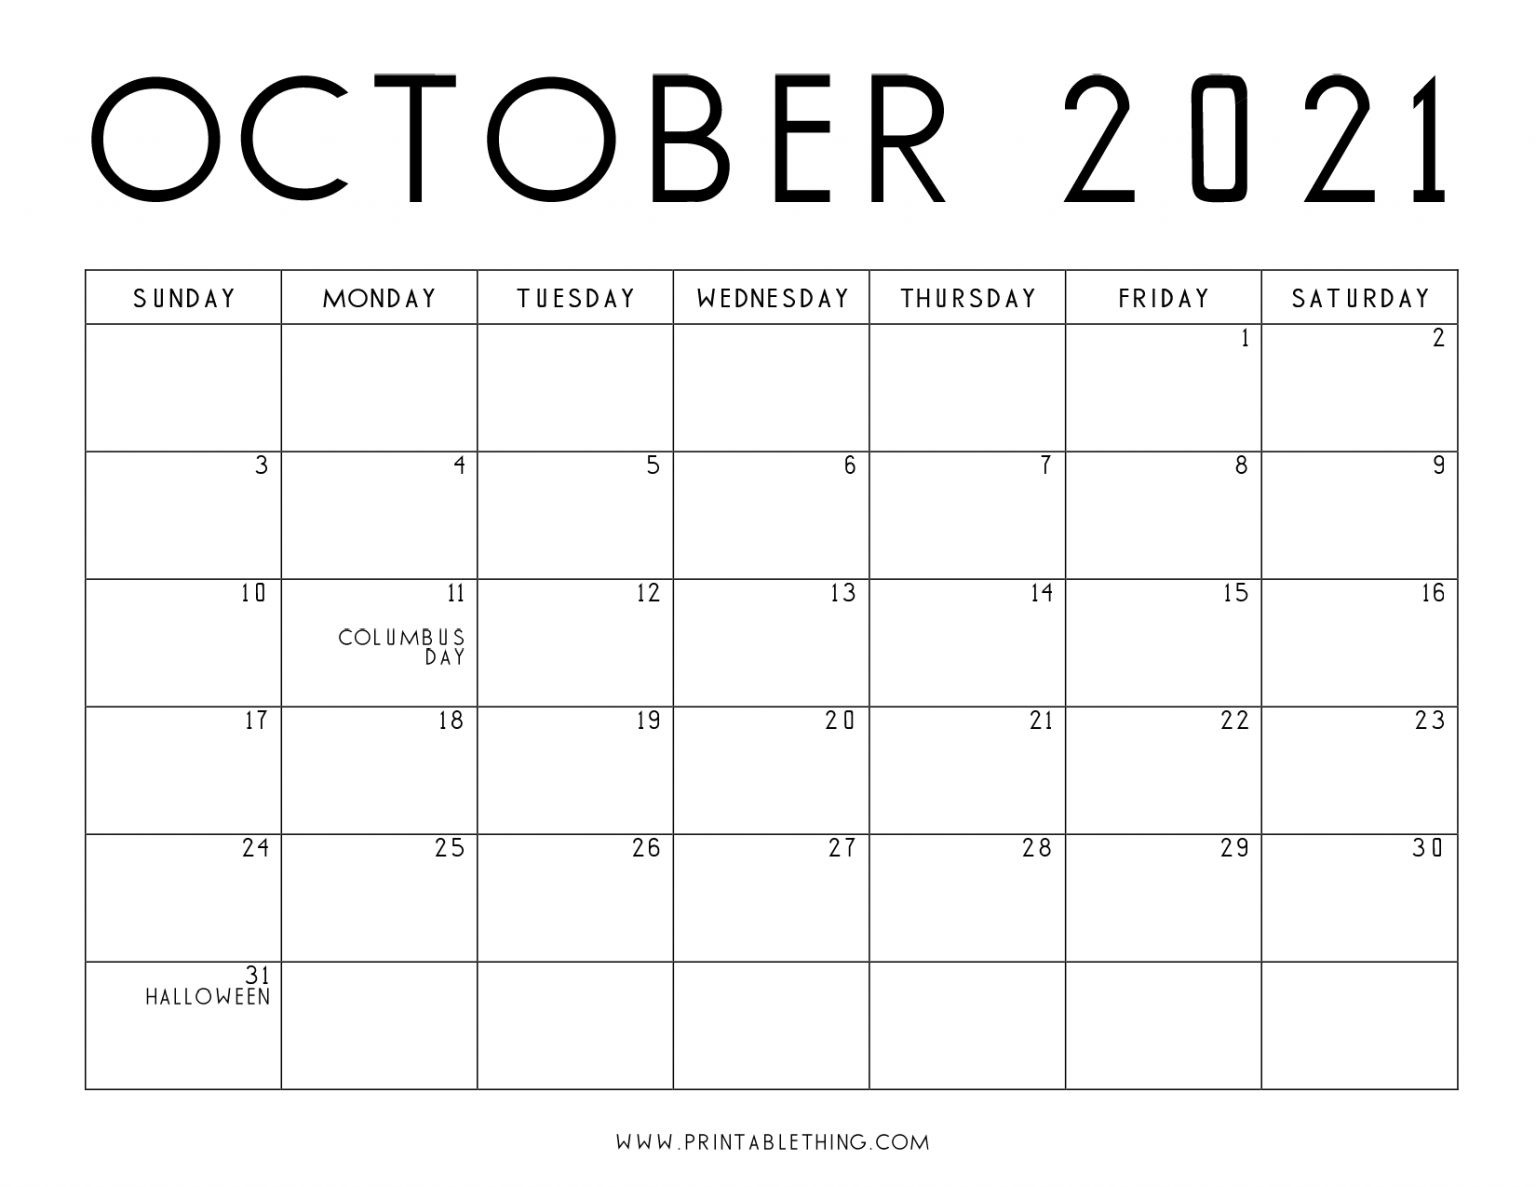 October 2021 Calendar Pdf, October 2021 Calendar Image Free-Blank 2 Page 2021 Calendar